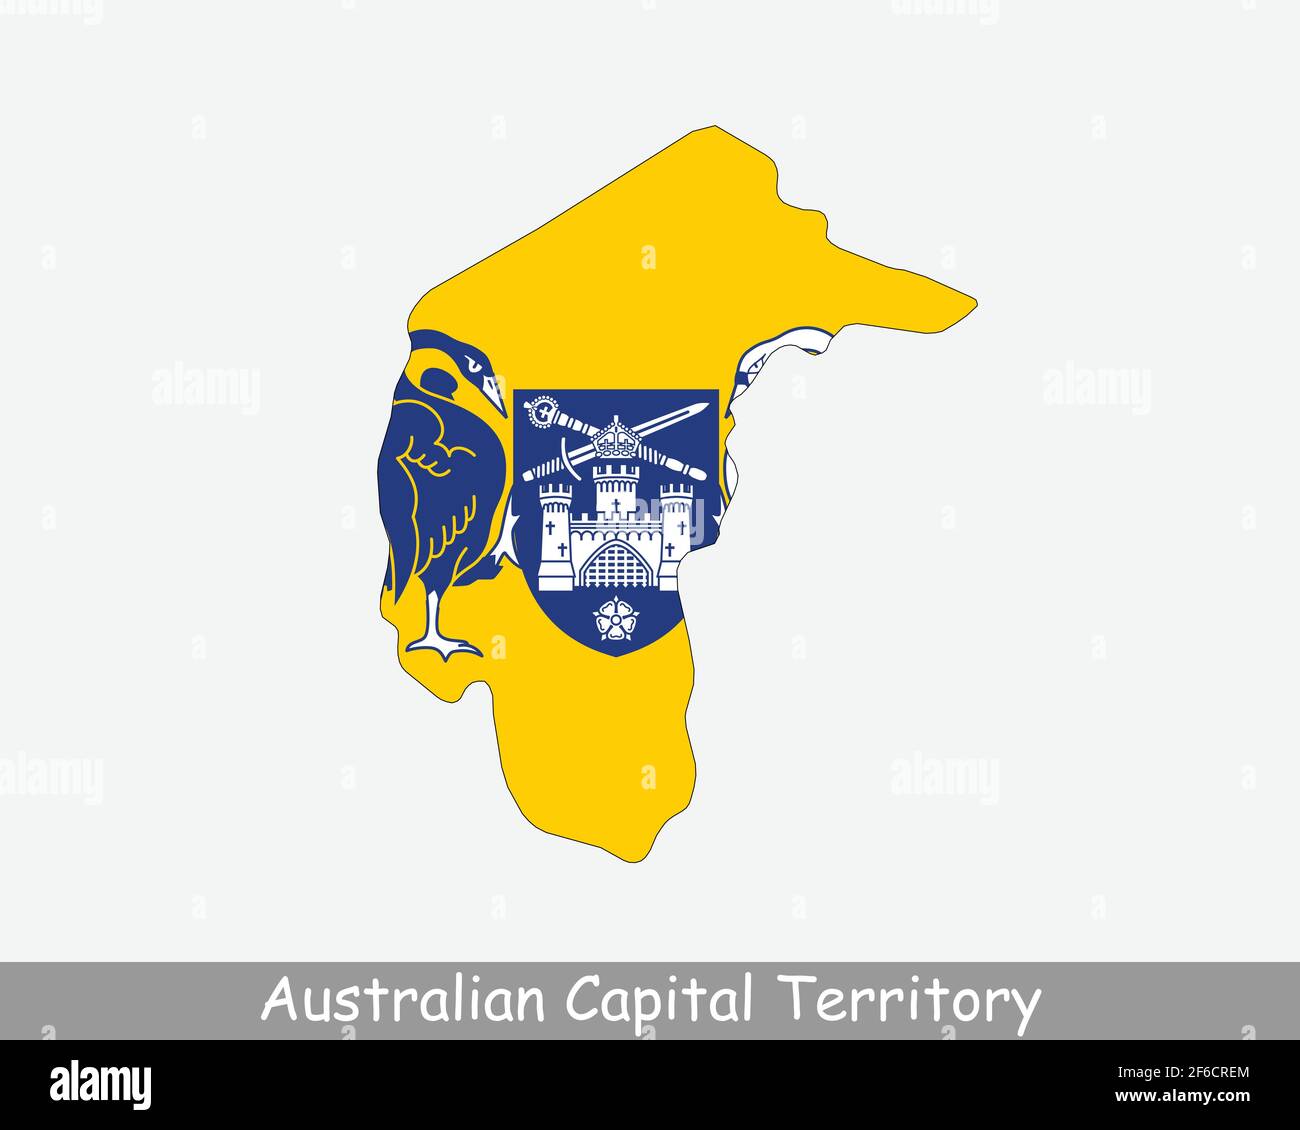 Australian Capital Territory Map Flag. Map of Federal Capital Territory, Australia with flag isolated on white background. Vector illustration. Stock Vector